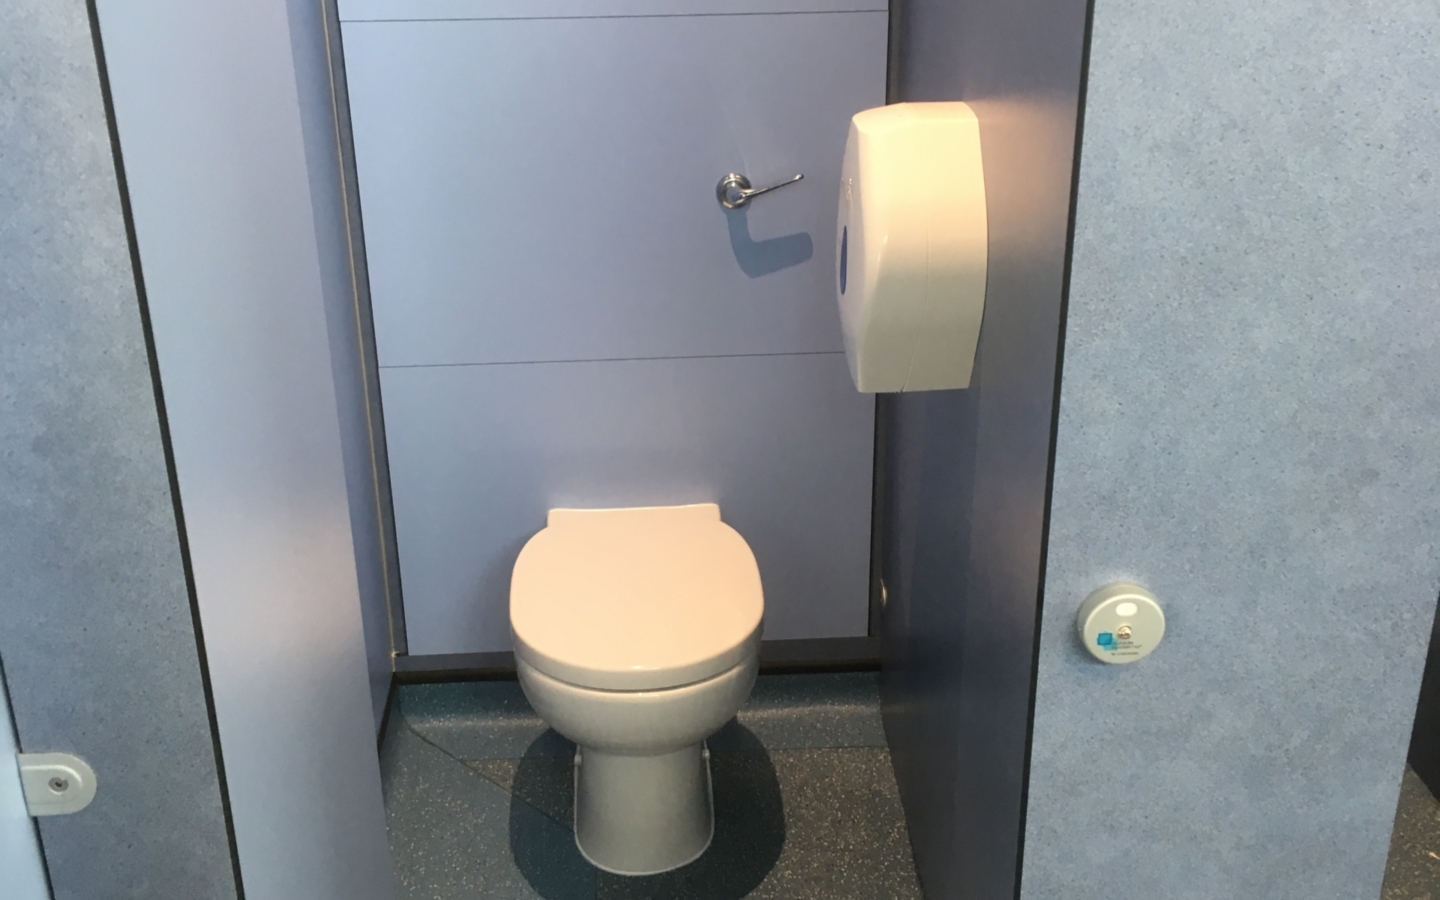 Secondary school toilet bathroom refurbishment